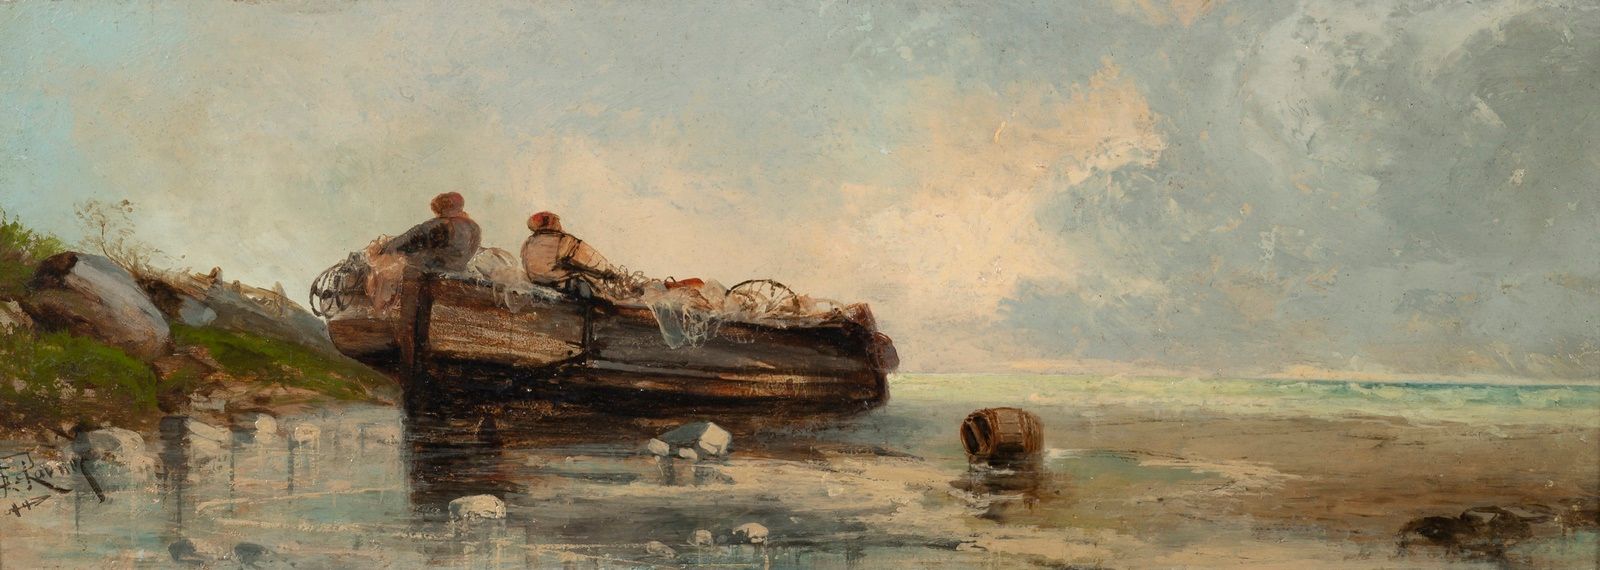 Null TS.RAVIER (活跃于19世纪)
岸上的两个渔民的船
面板，一块木板，没有镶边
17,5 x 49,5 cm
签名左下：TS Ravier